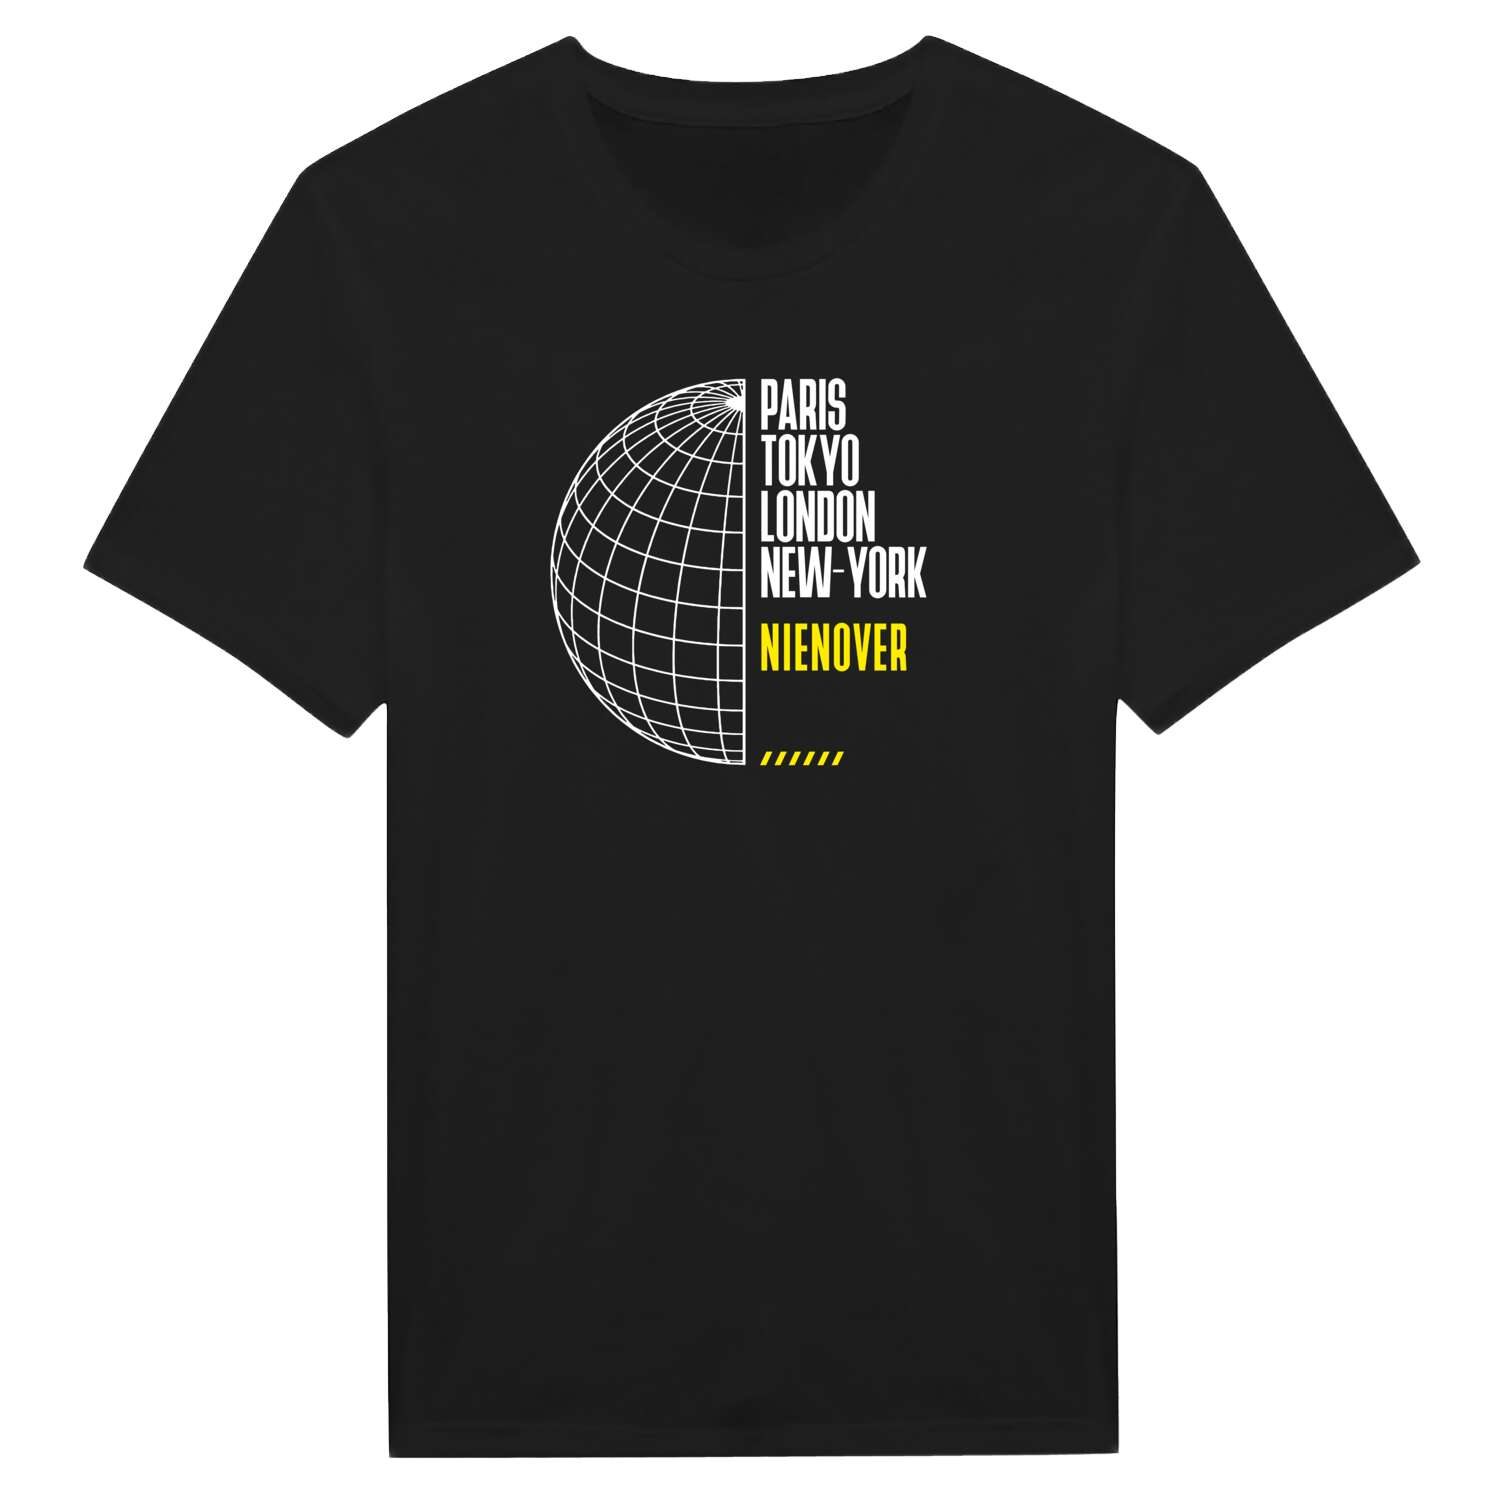 Nienover T-Shirt »Paris Tokyo London«